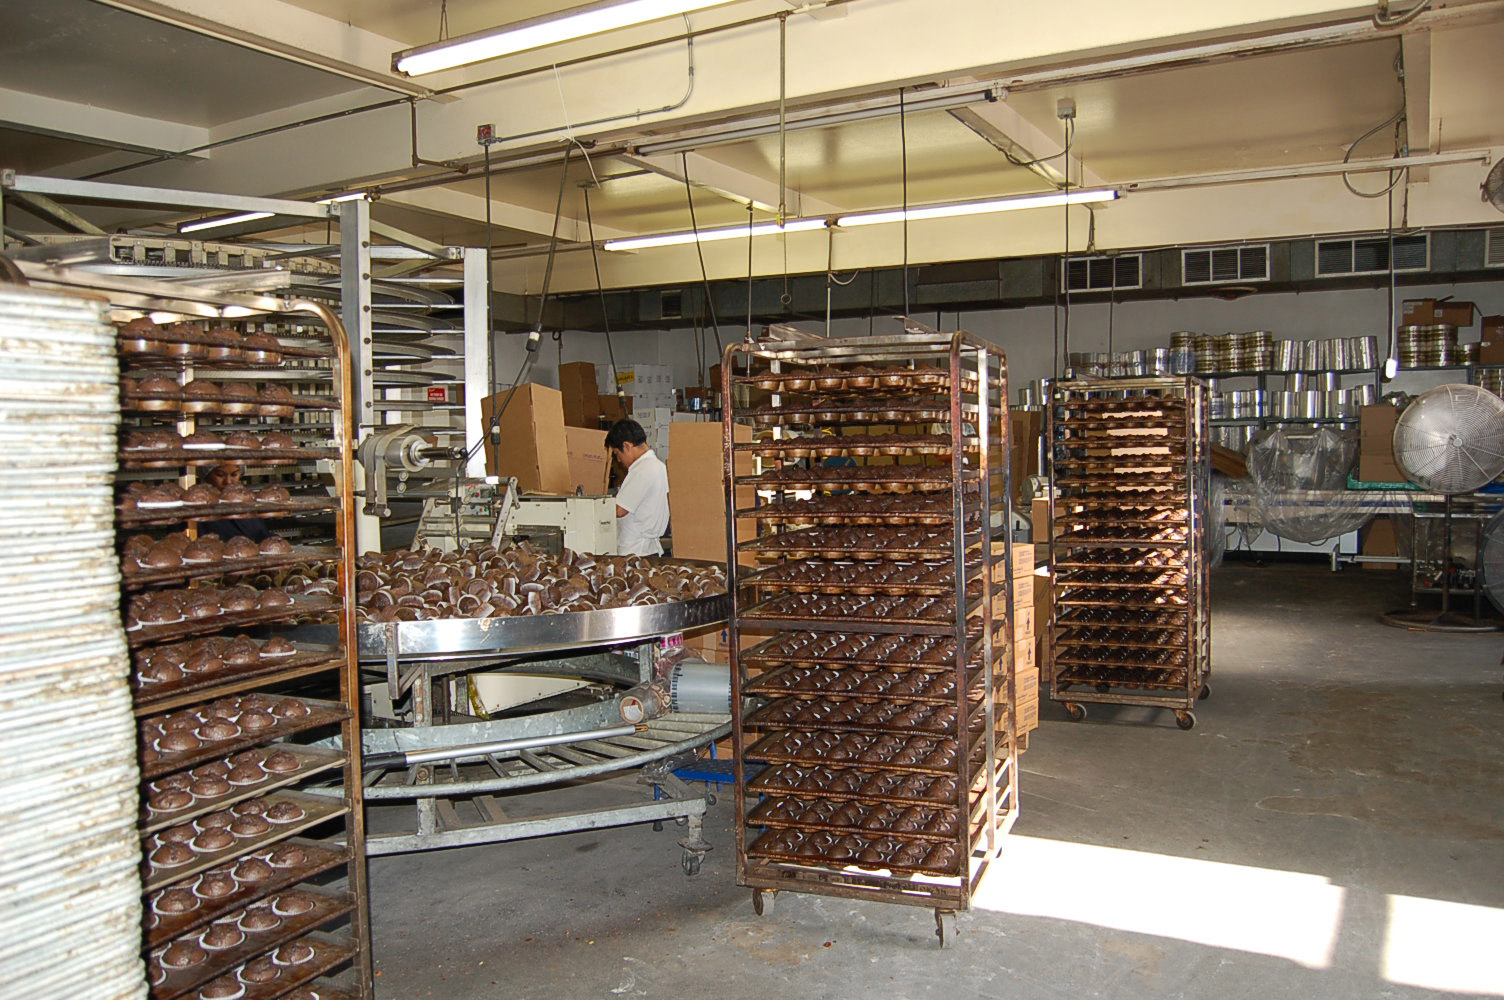 Bake R Us manufacturing facility